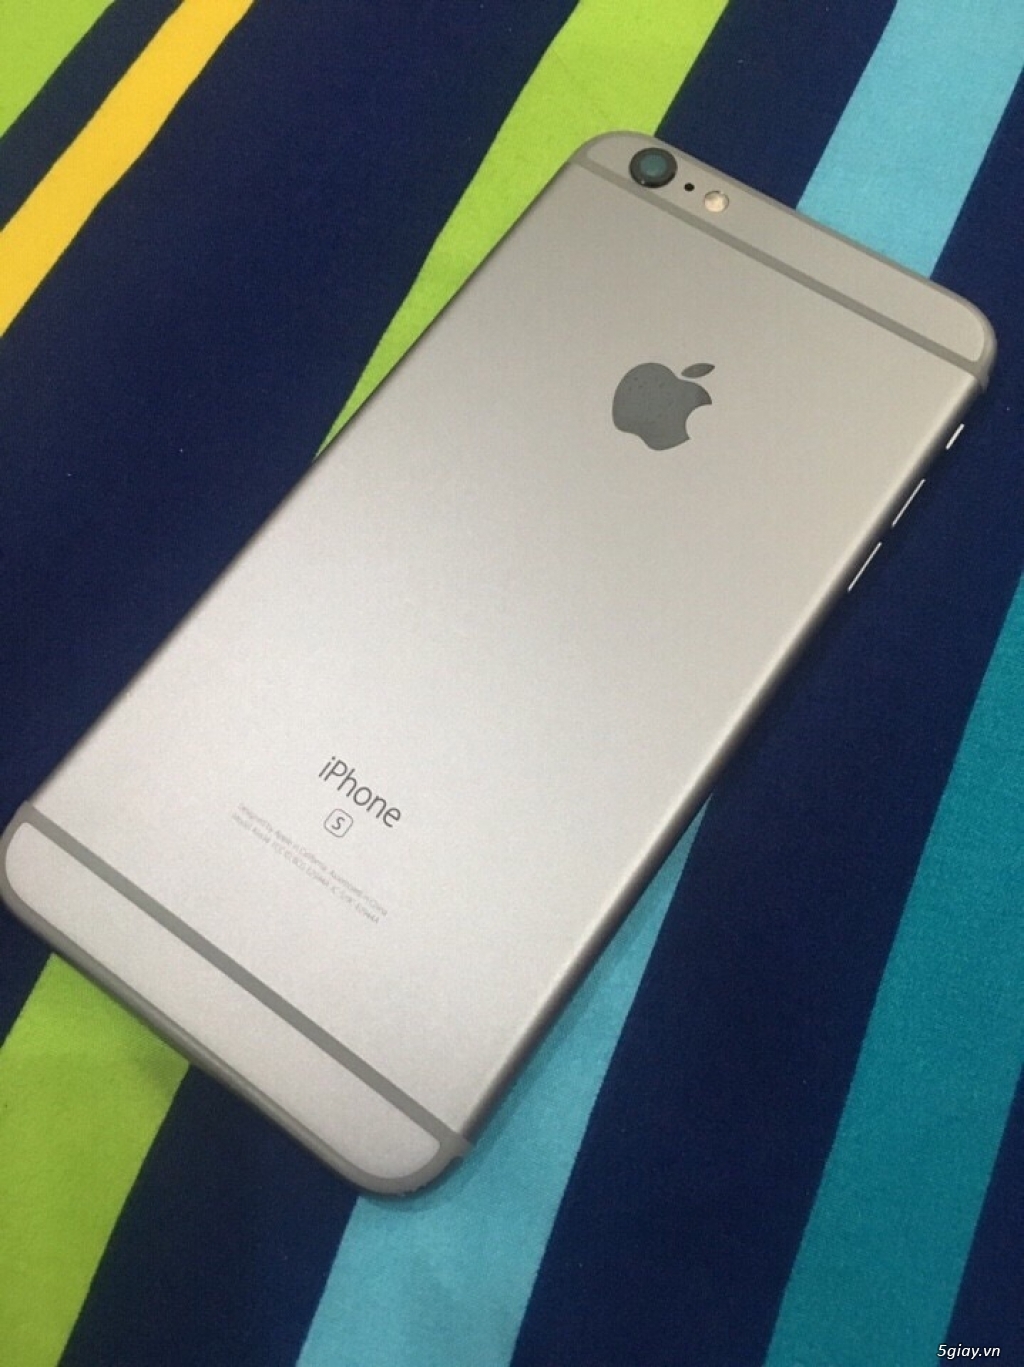 Iphone 6s plus Grey 64gb còn BH apple 9/2017 - 1